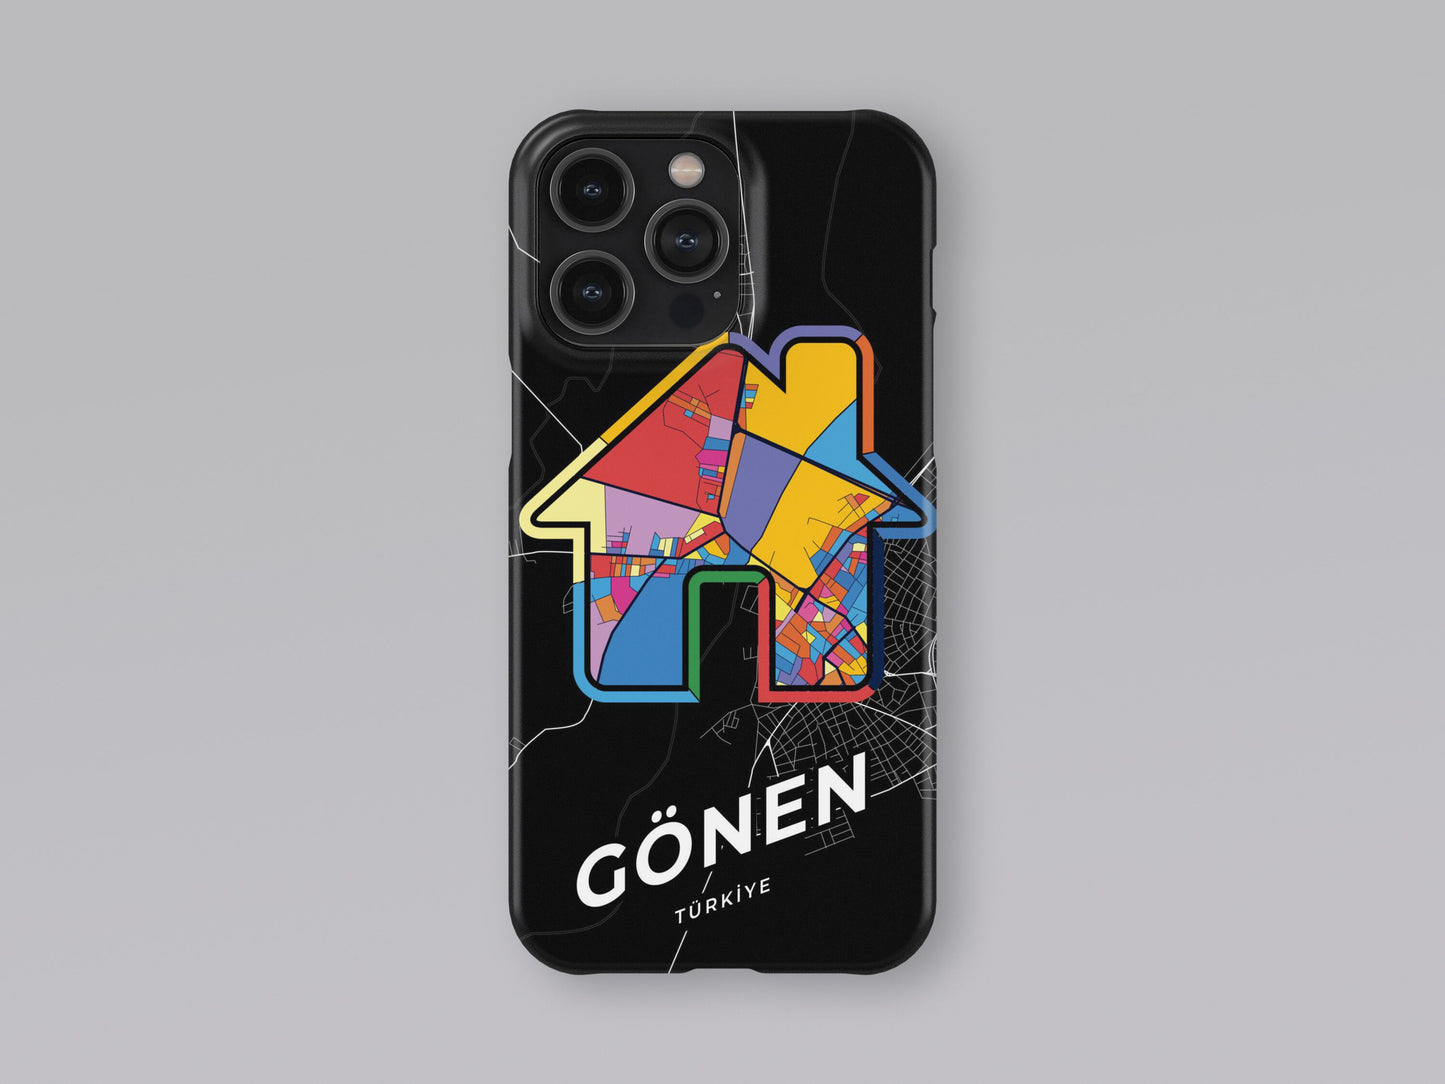 Gönen Turkey slim phone case with colorful icon. Birthday, wedding or housewarming gift. Couple match cases. 3